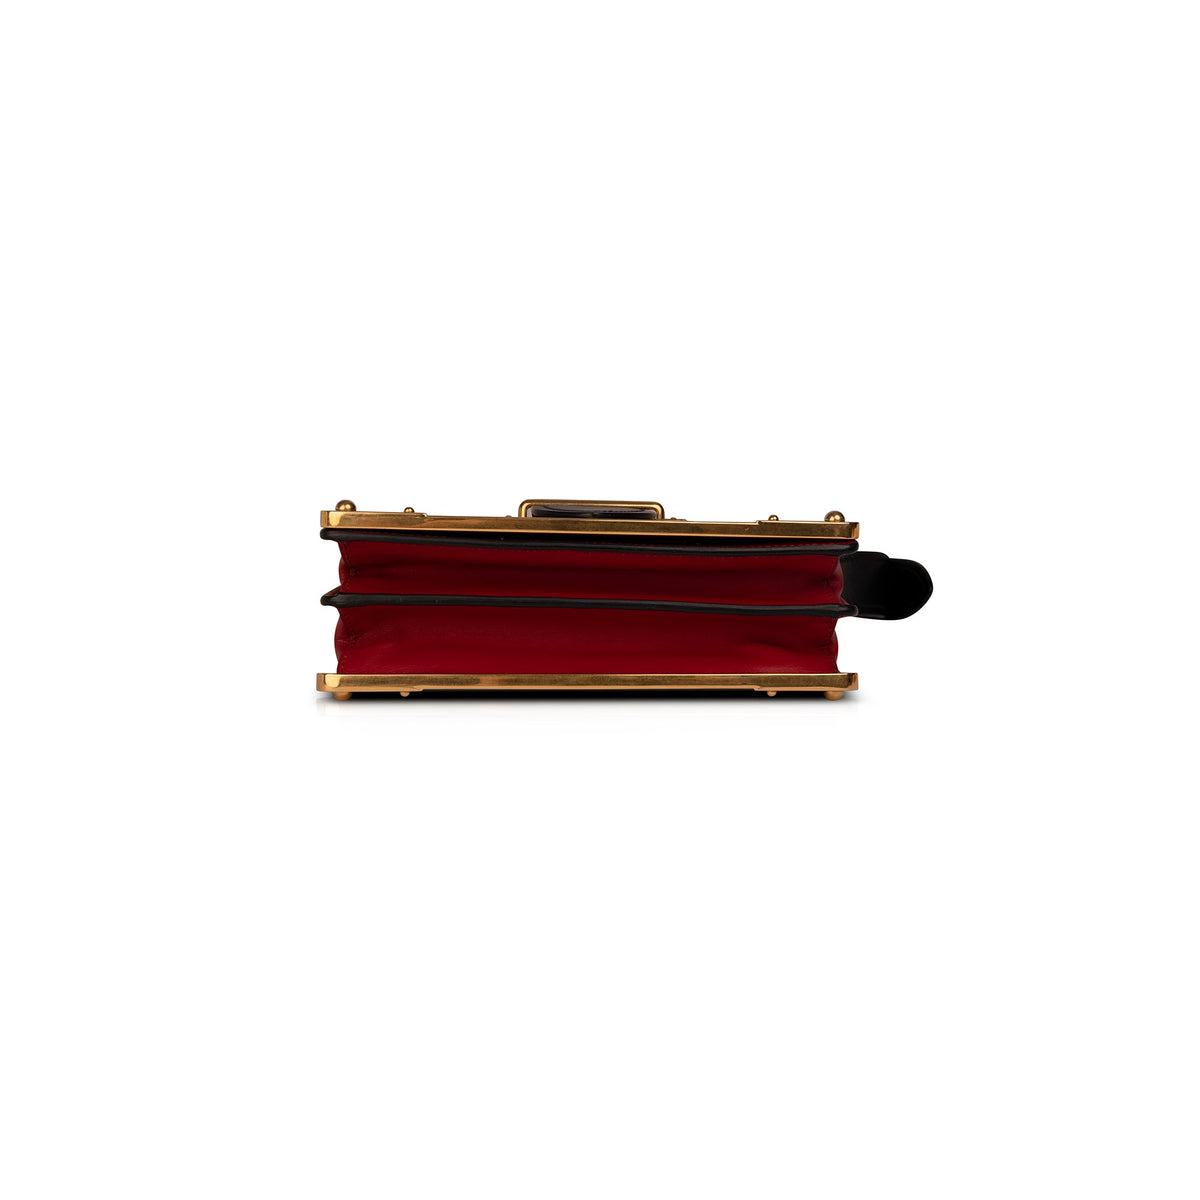 Prada Cahier Shoulder Bag in Red